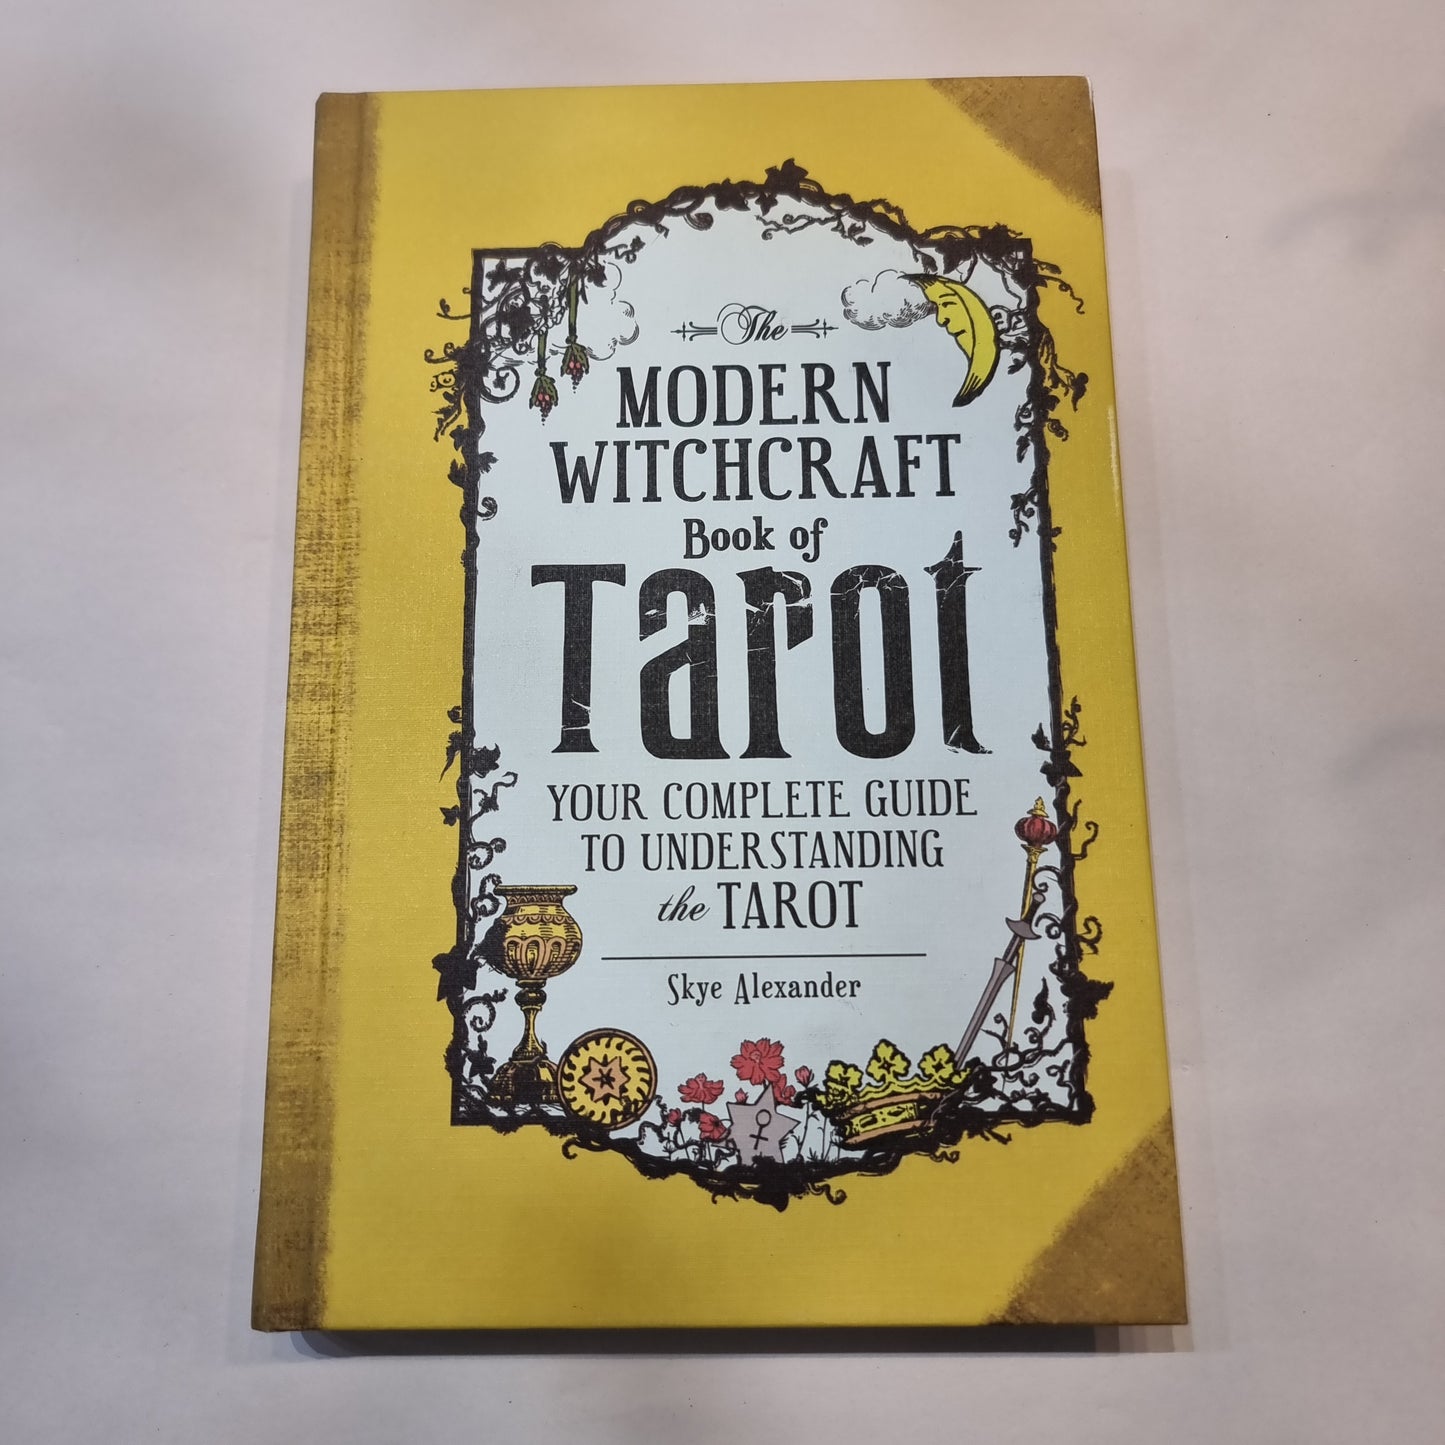 Modern witchcraft book of Tarot - Rivendell Shop